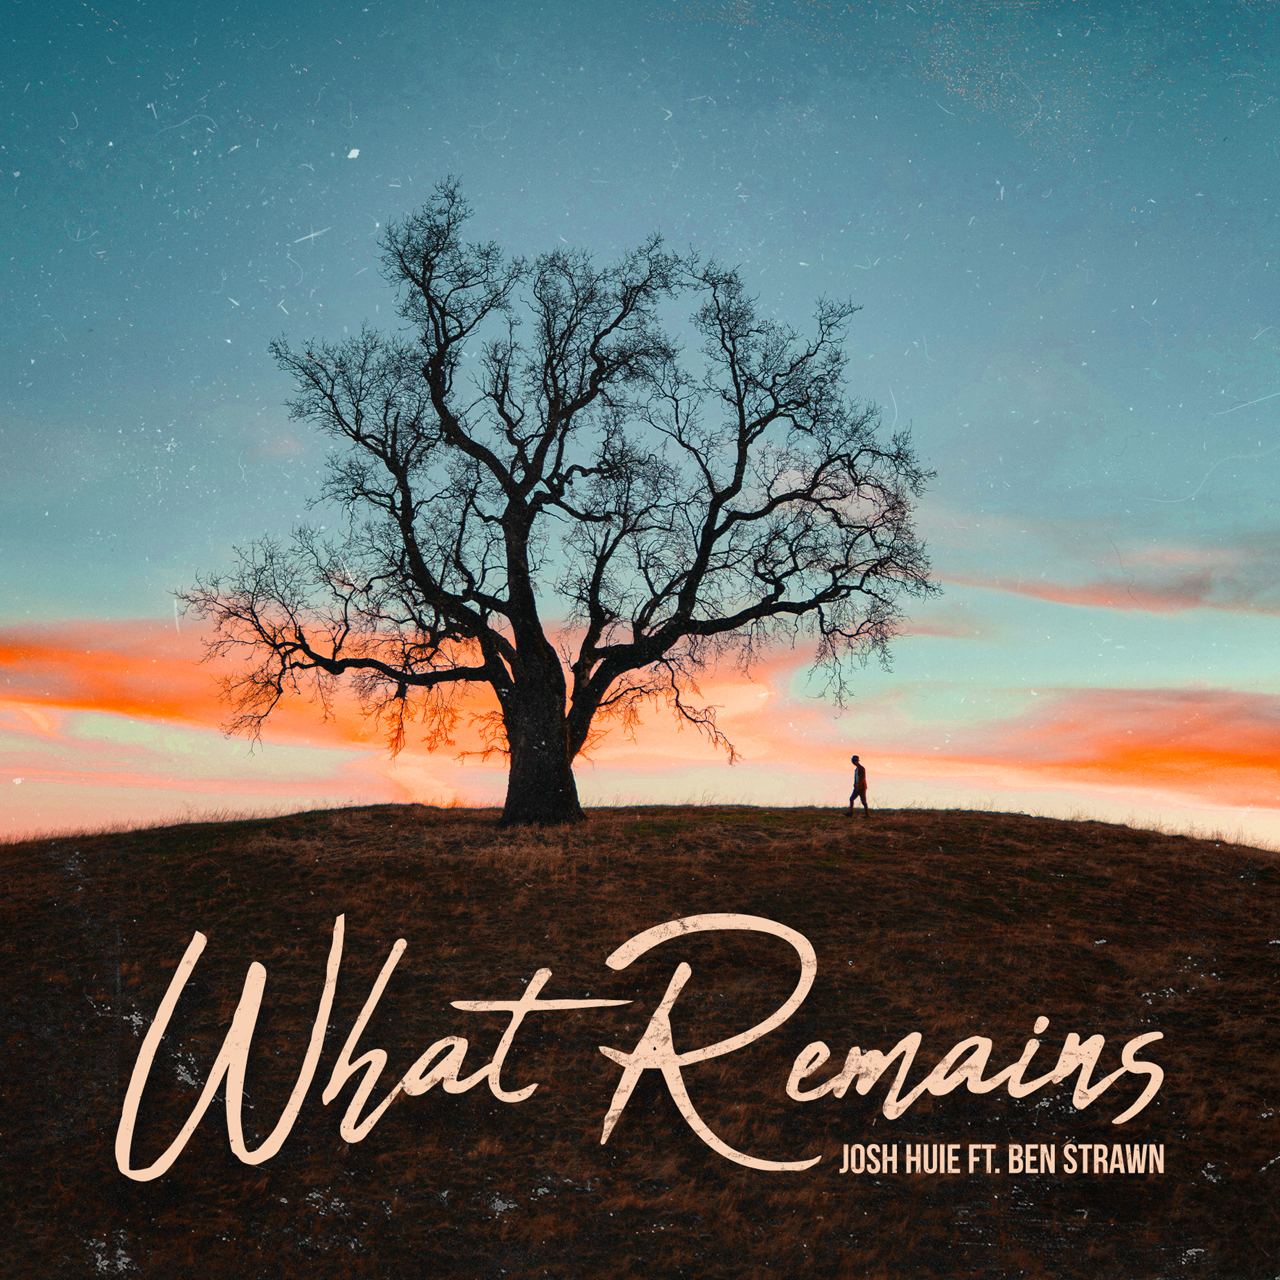 alt="Josh Huie - What remains (2022, Josh Huie Music) COVER"